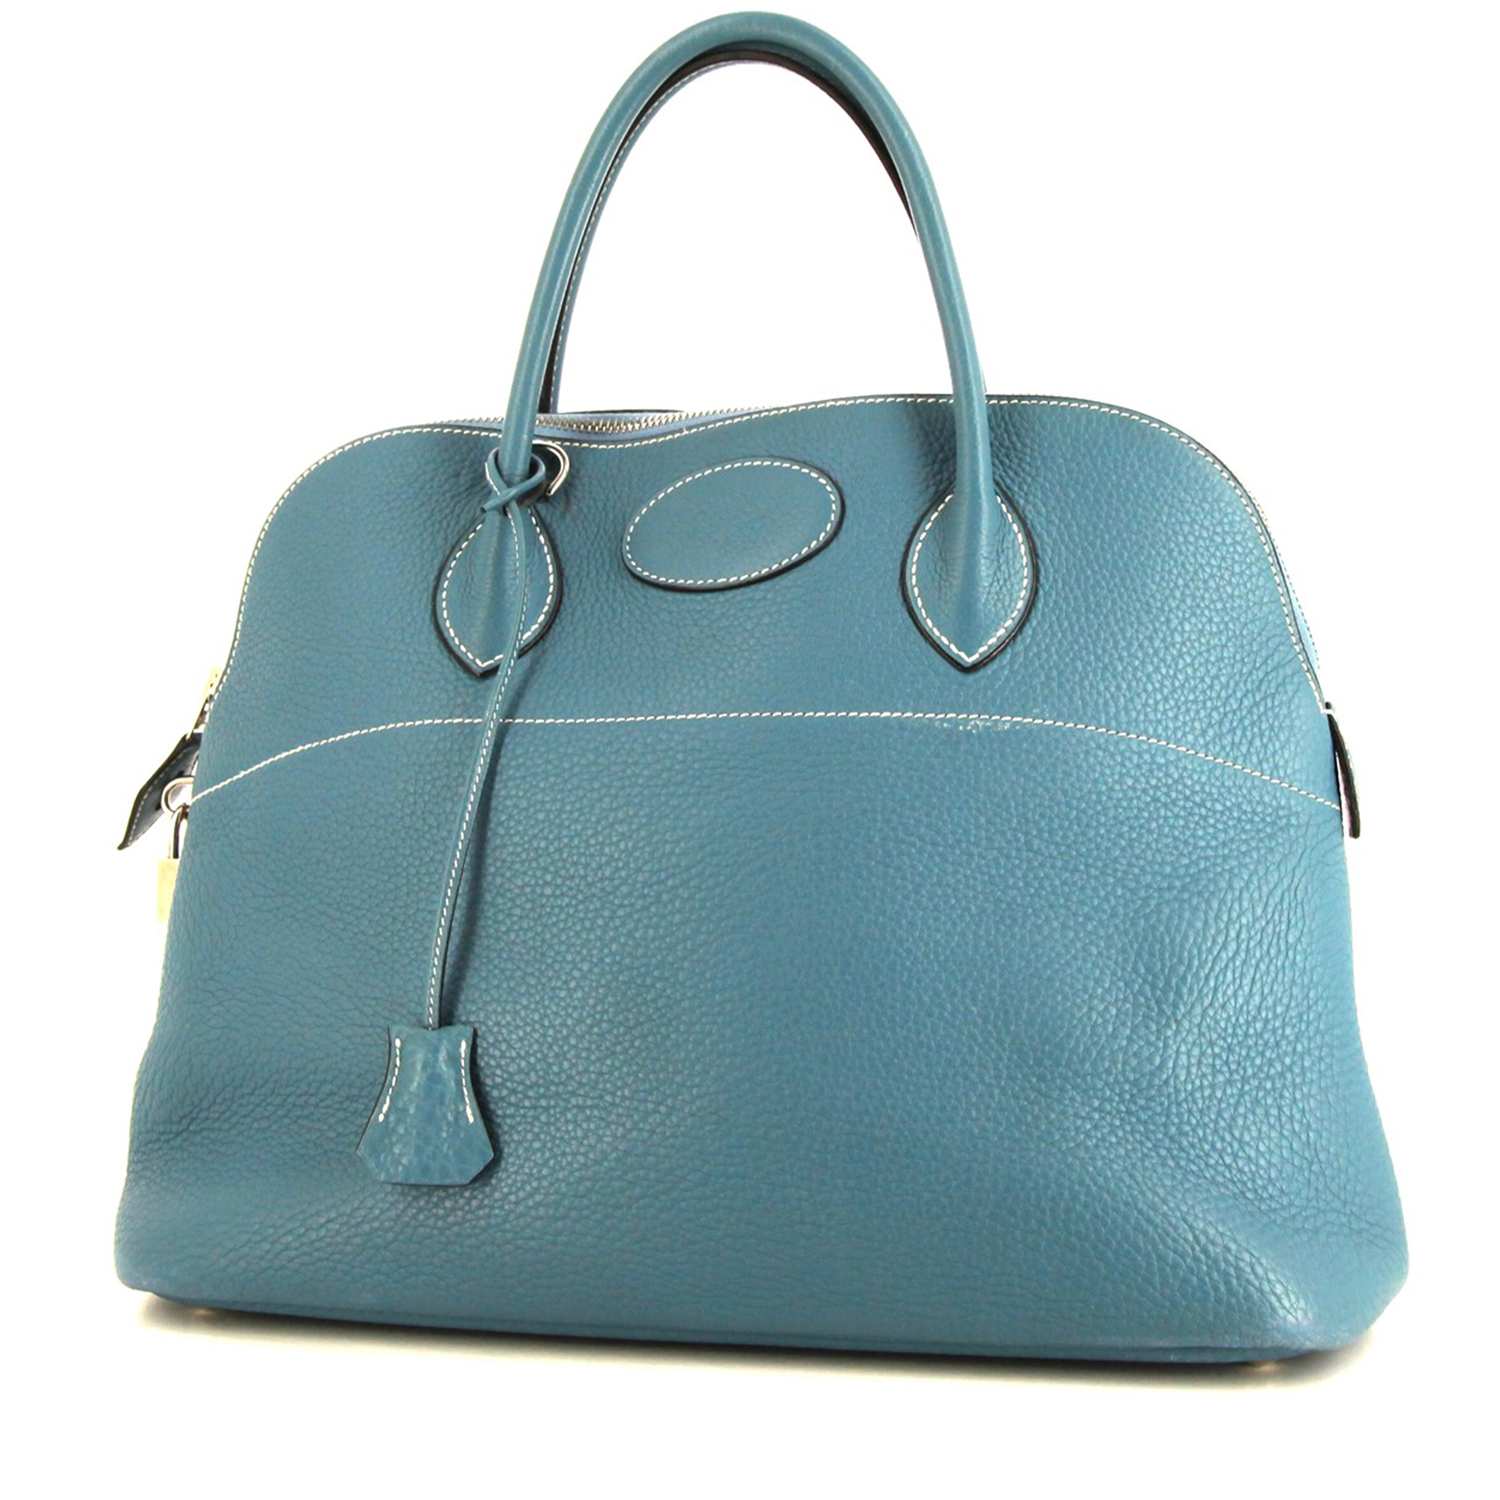 Hermès Bolide 35 cm Handbag in Blue Jean Leather Taurillon Clémence